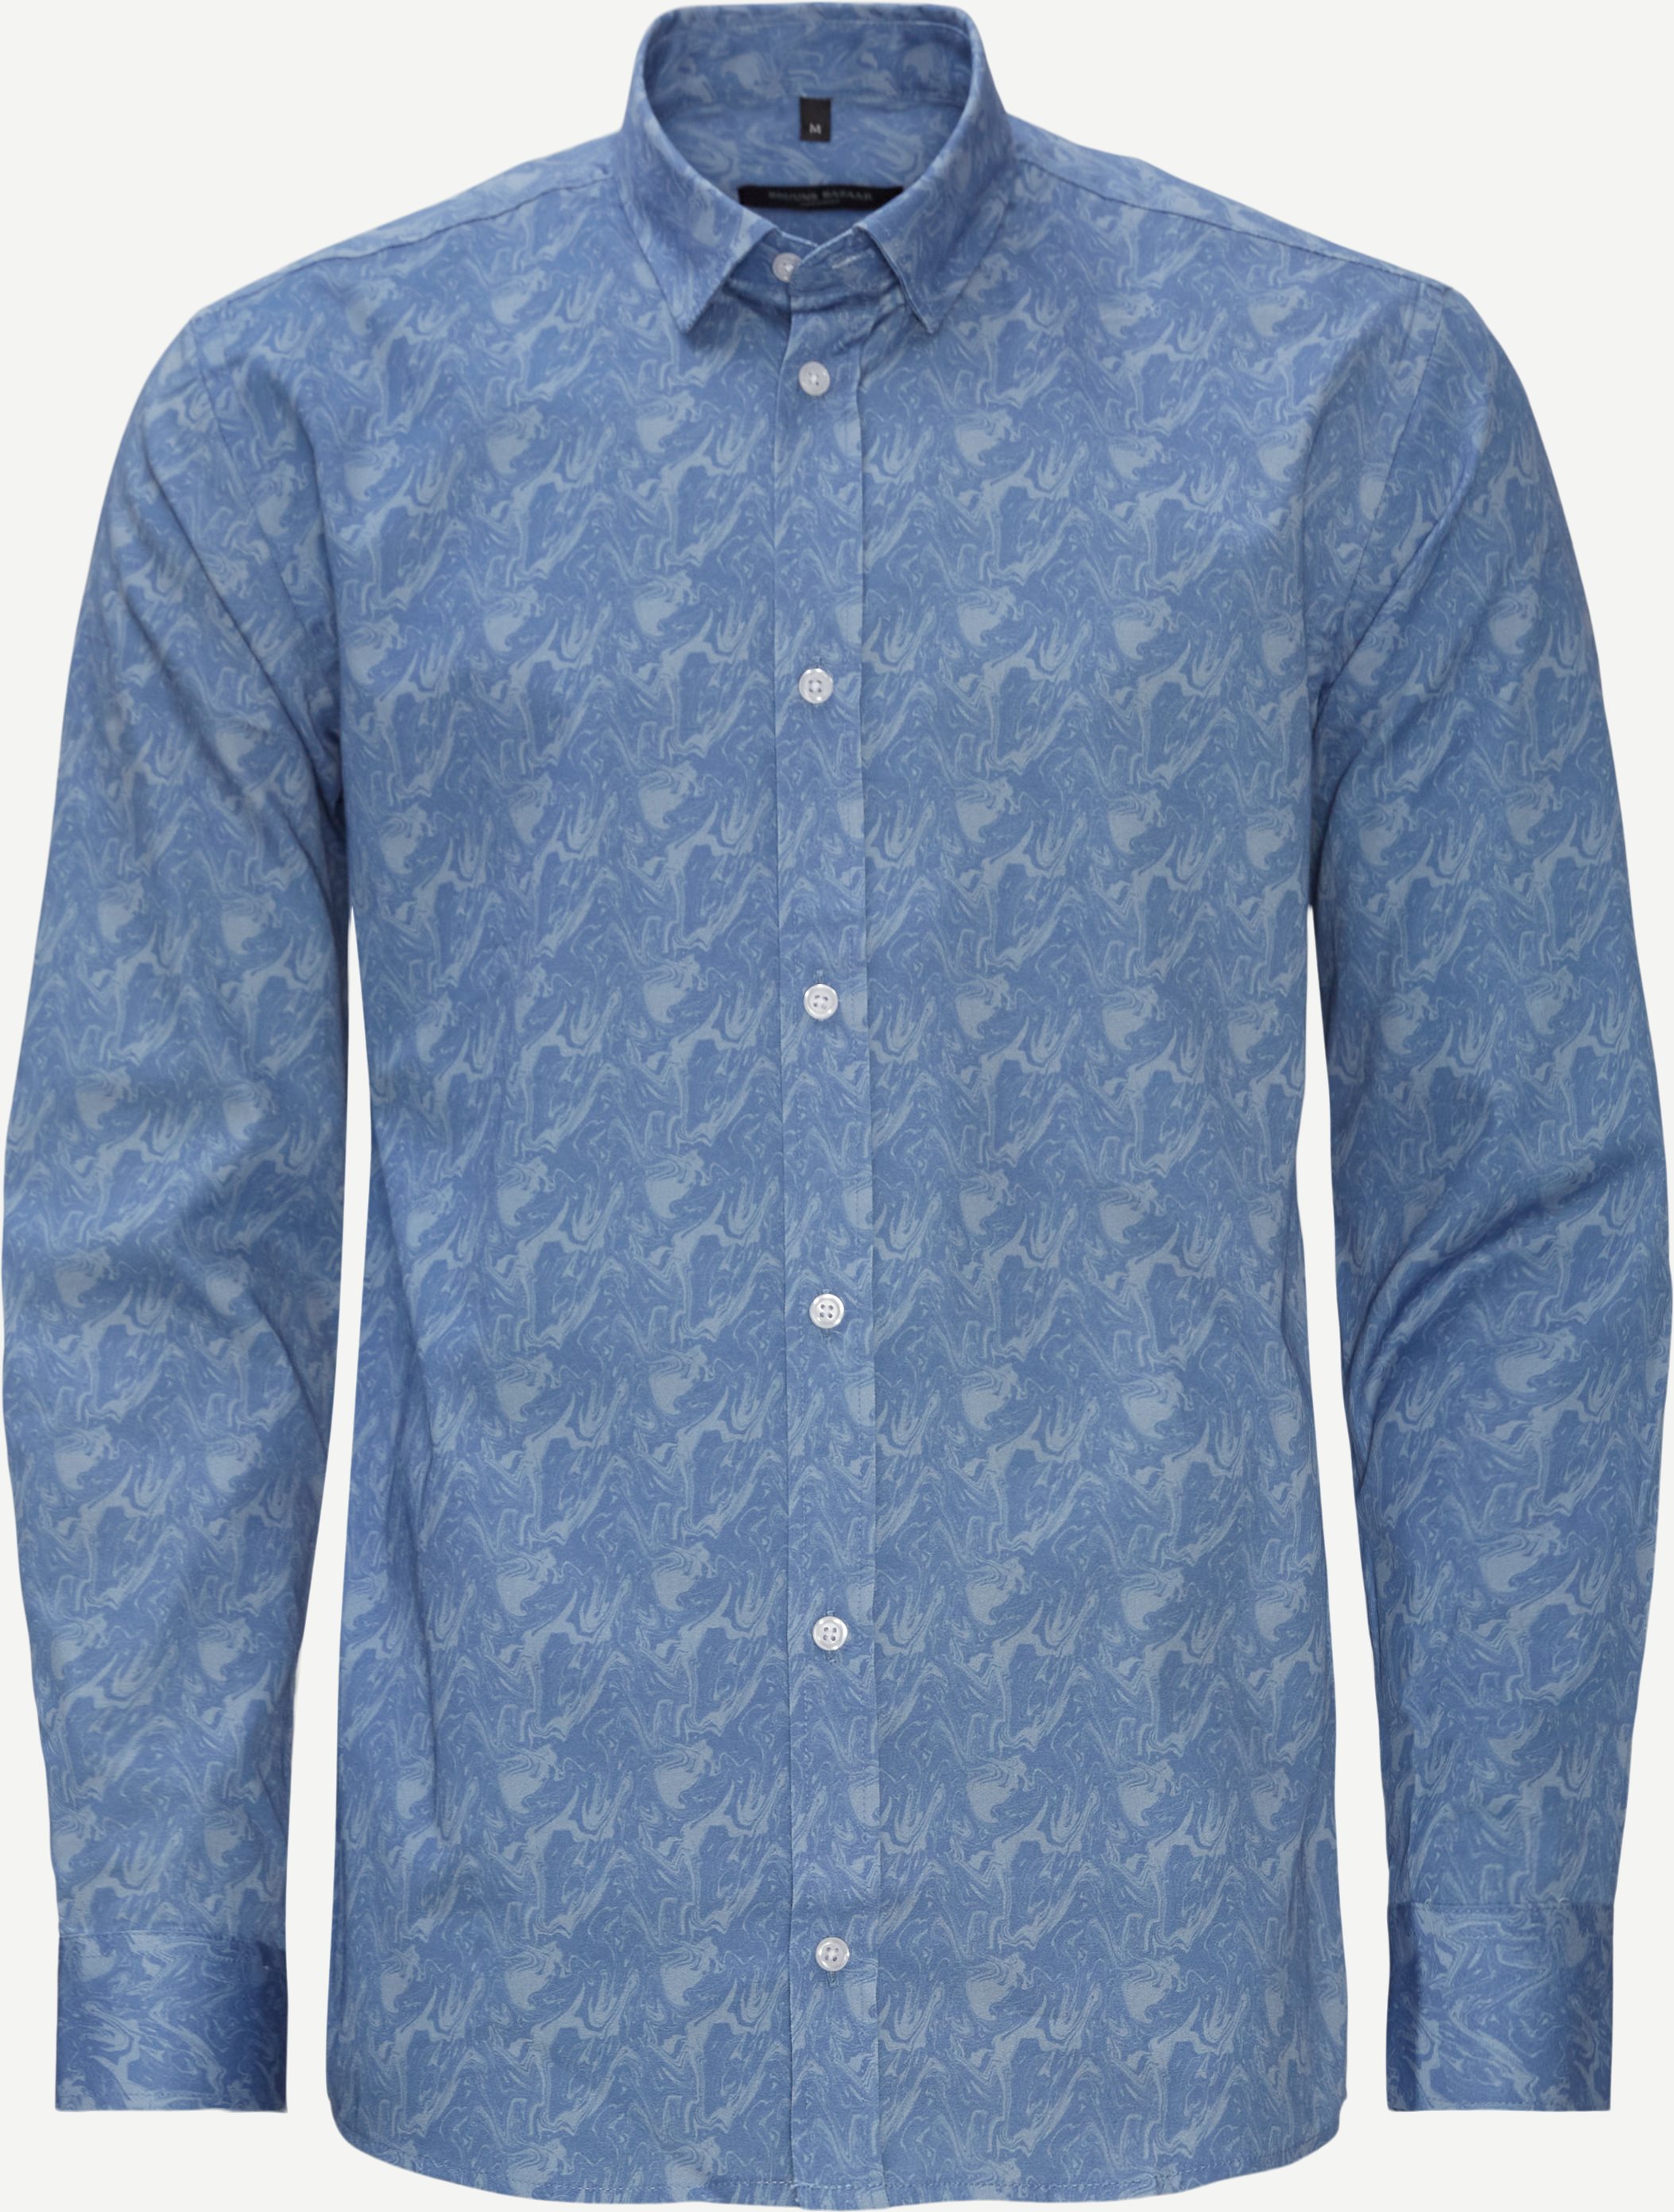 Sky Norman Shirt - Skjorter - Regular fit - Blå